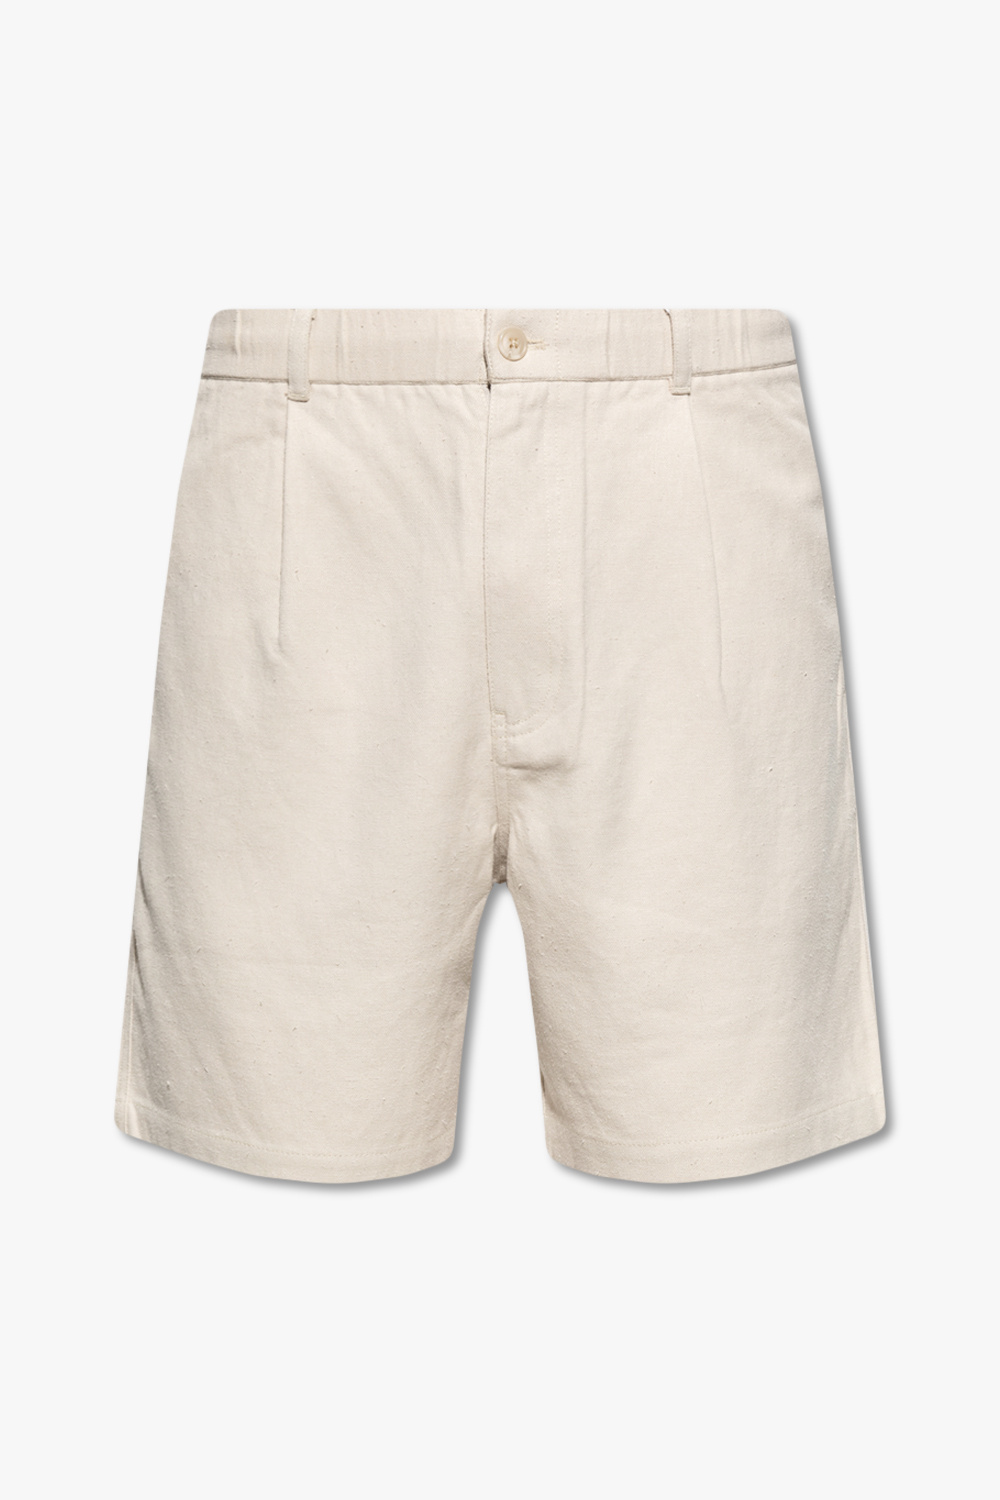 Samsøe Samsøe ‘Hammel’ shorts